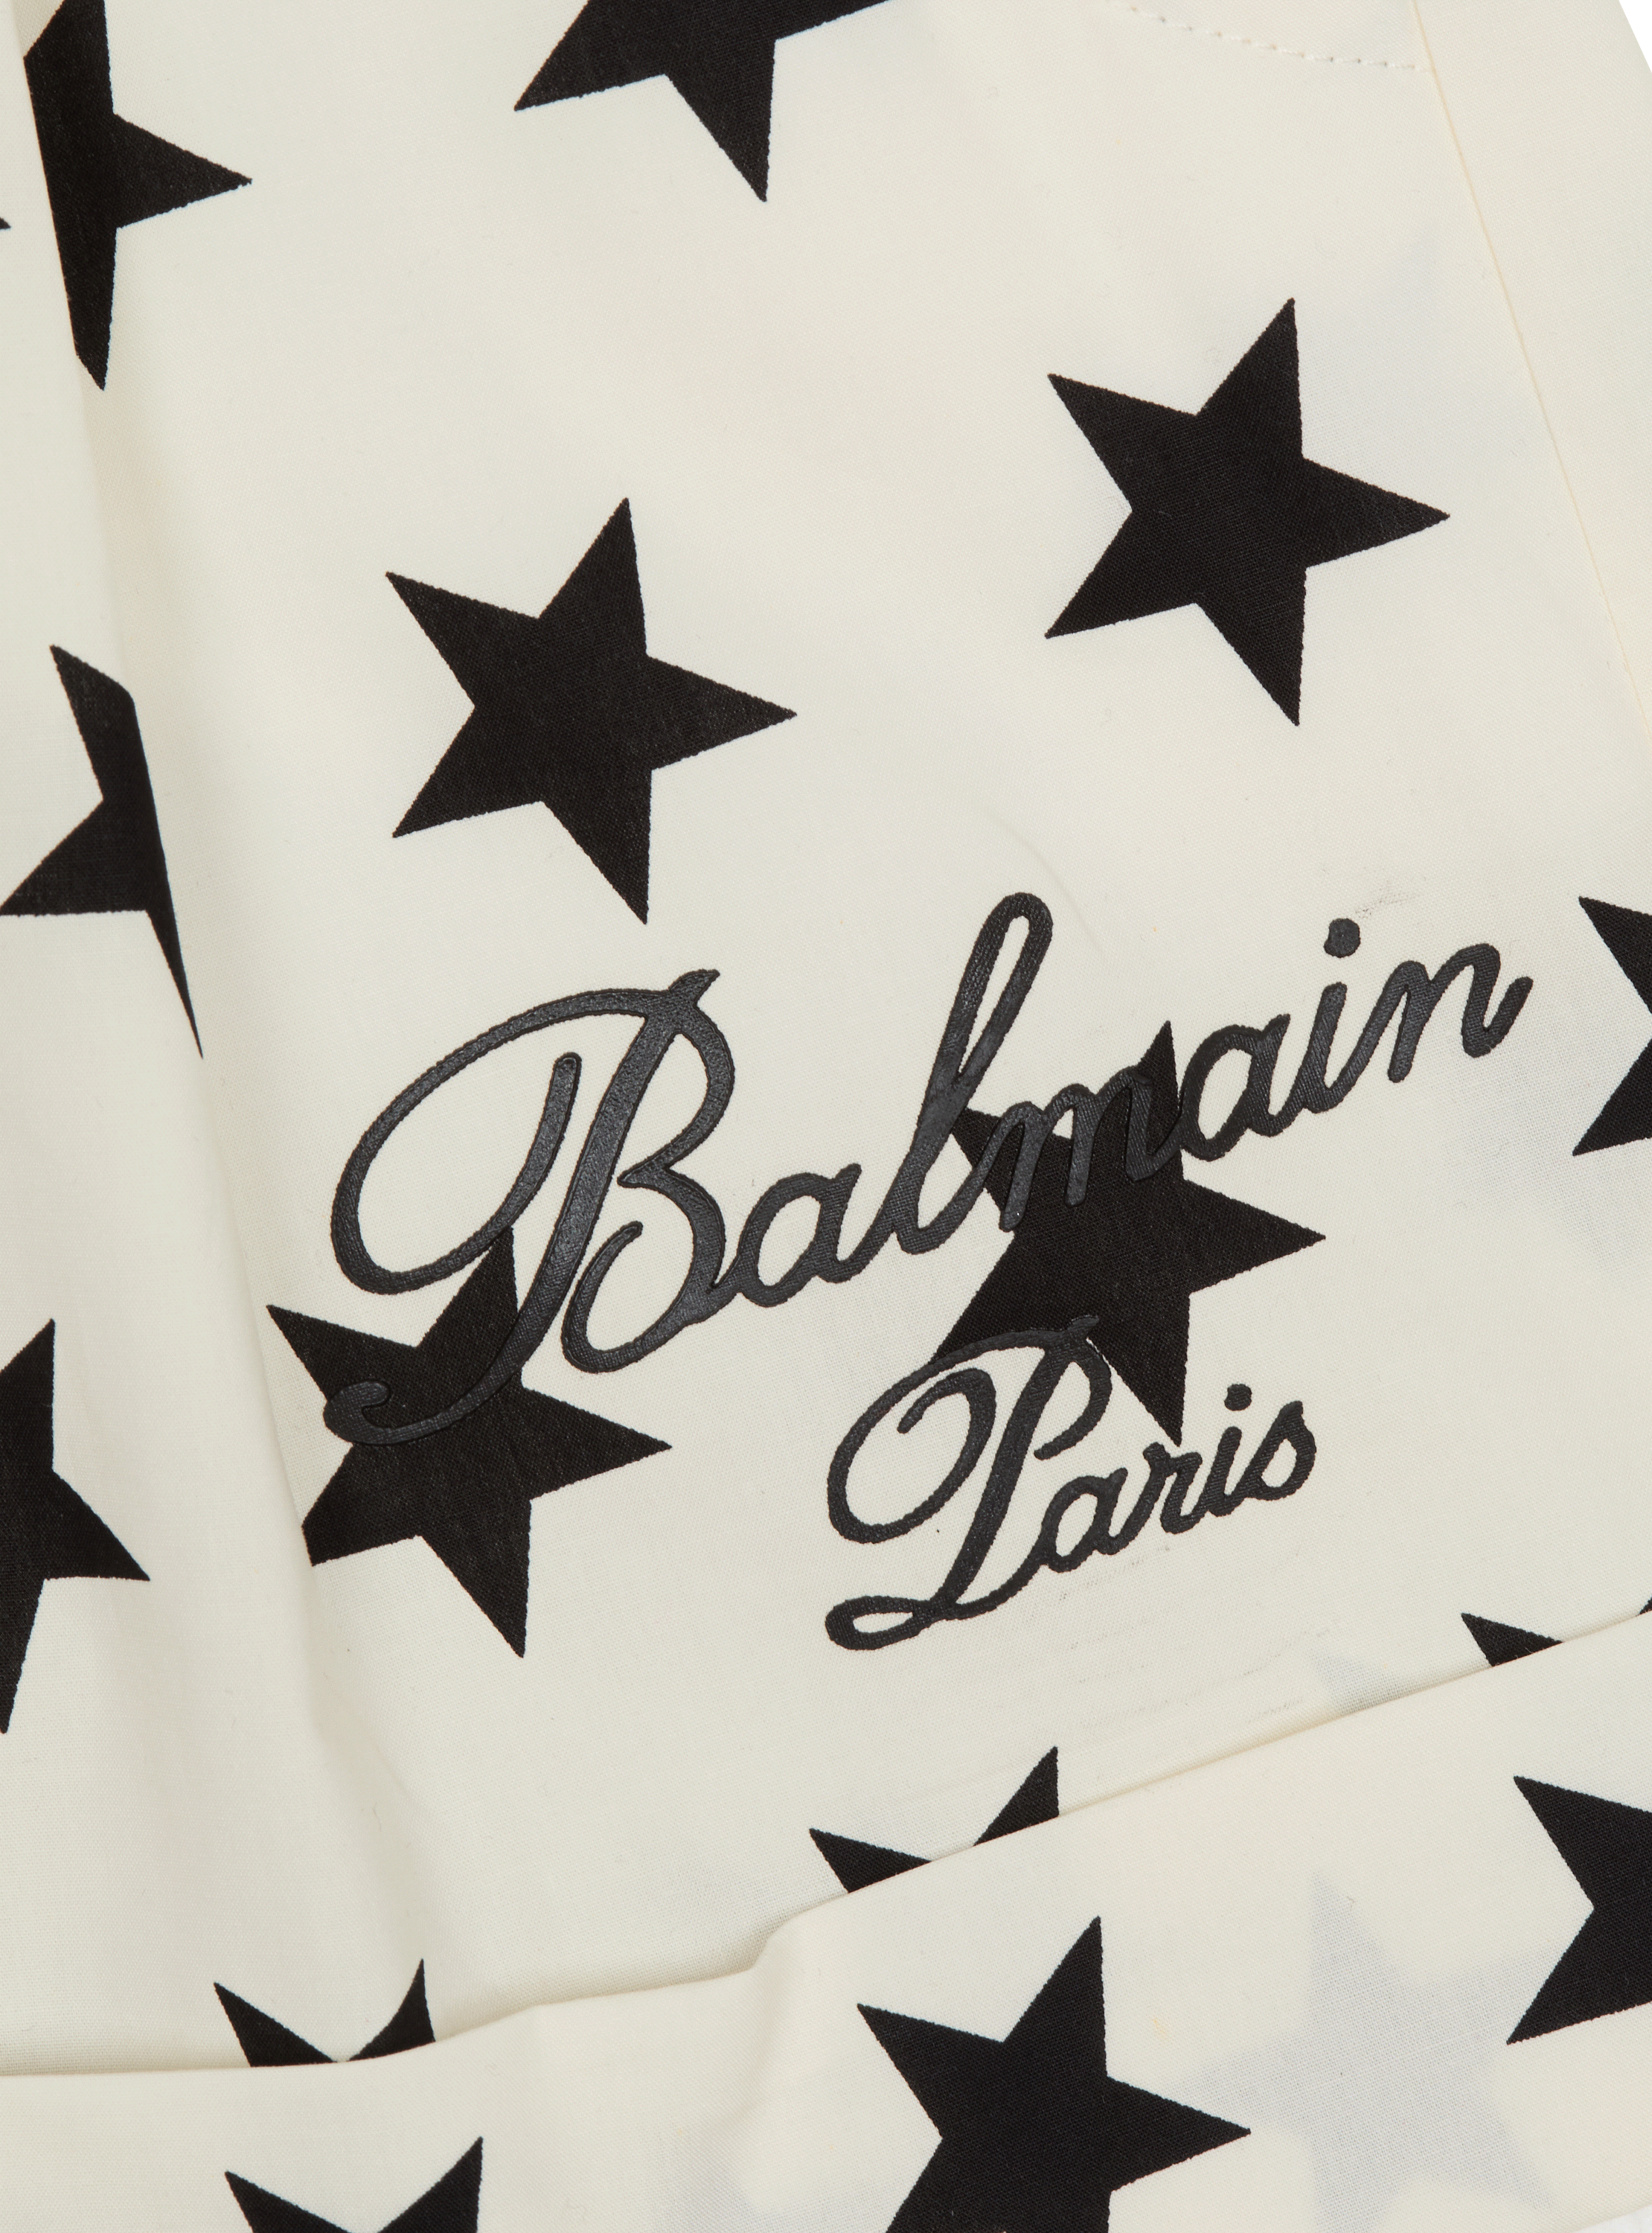 Balmain Signature Stars shorts